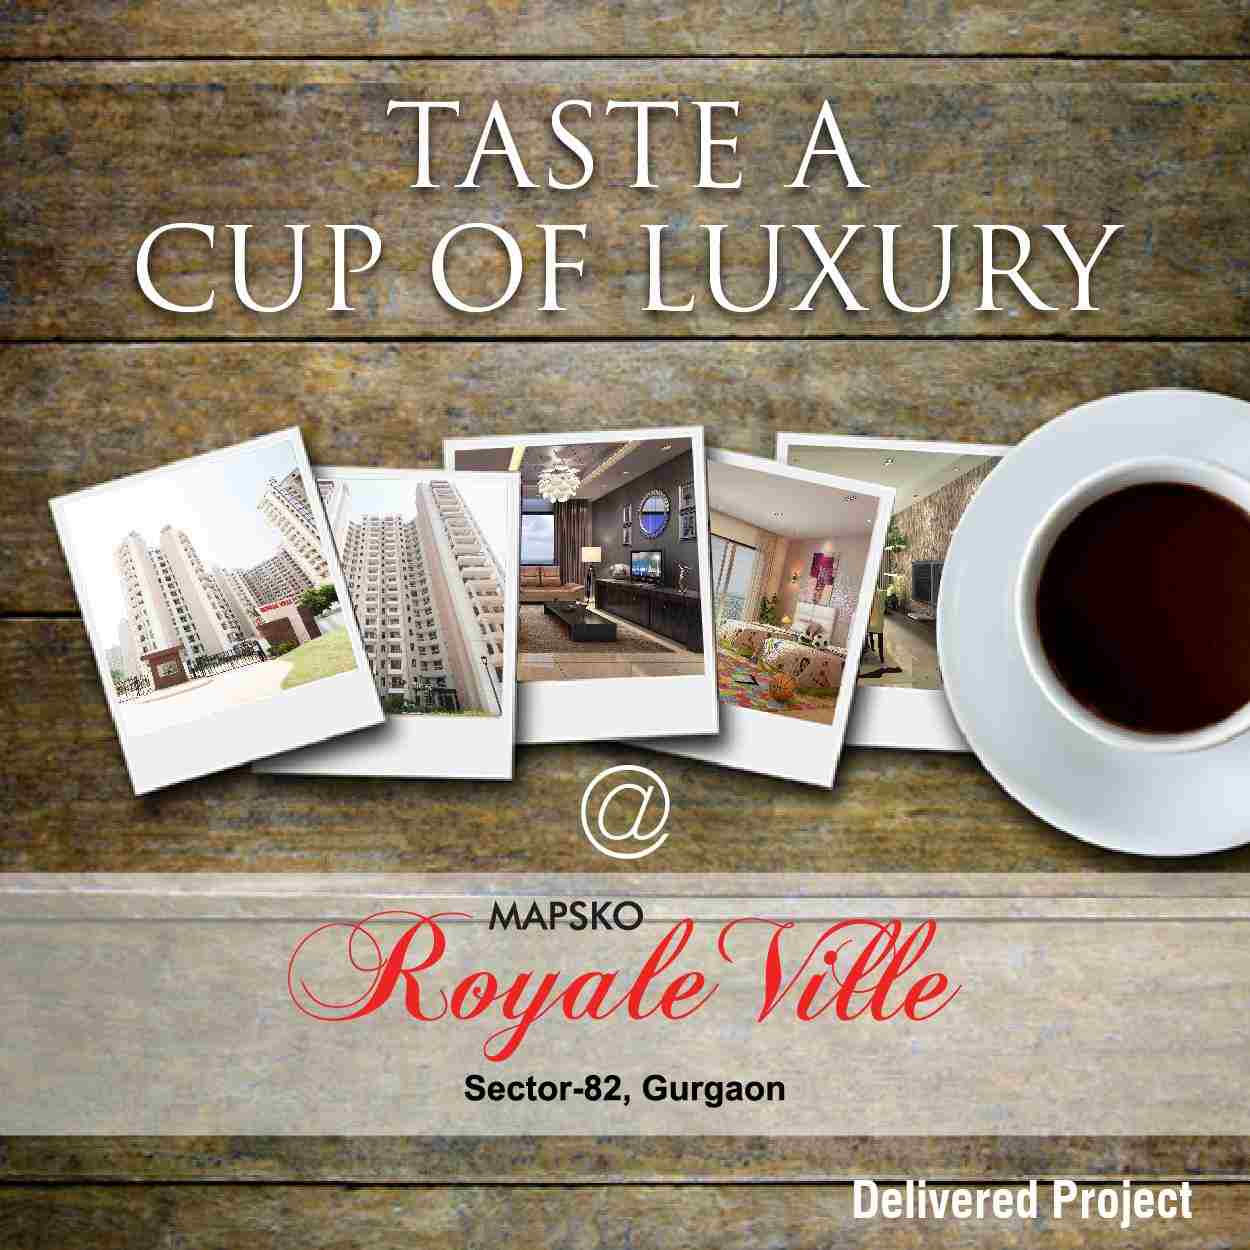 Taste a cup of luxury at Mapsko Royale Ville in Gurgaon